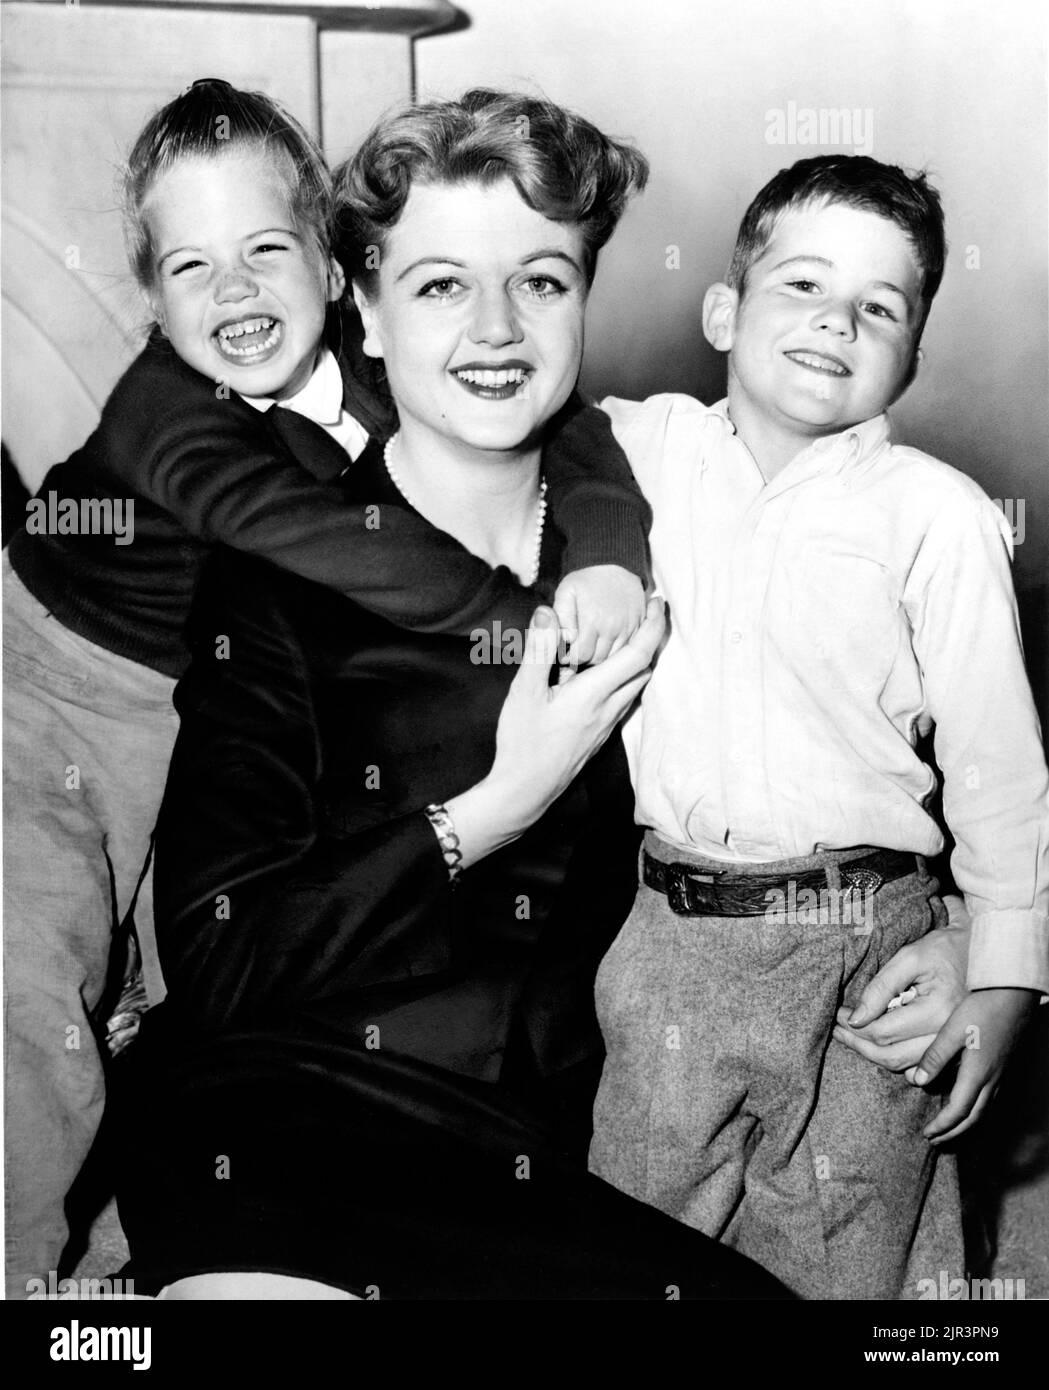 1957 c. , USA : The celebrated british actress Dame ANGELA LANSBURY ( born 16 october 1925 ) with son  Anthony Pullen Shaw ( born in 1952 , movie director and actor ) and daughter Deirdre Angela Shaw , born from the marriage with actor Peter Shaw ( 1918 - 2003 ) . Unknown photographer .- HISTORY - FOTO STORICHE - PORTRAIT - RITRATTO - ATTORE - ATTRICE - MOVIE - CINEMA  - REGISTA - FRATELLI - BROTHERS - FIGLI - SONS - fratello e sorella - figlio e figlia - mamnma - mother - personalità da da giovane giovani - da bambina bambino bambini - personality personalities when was young - CHILDHOOD - IN Stock Photo